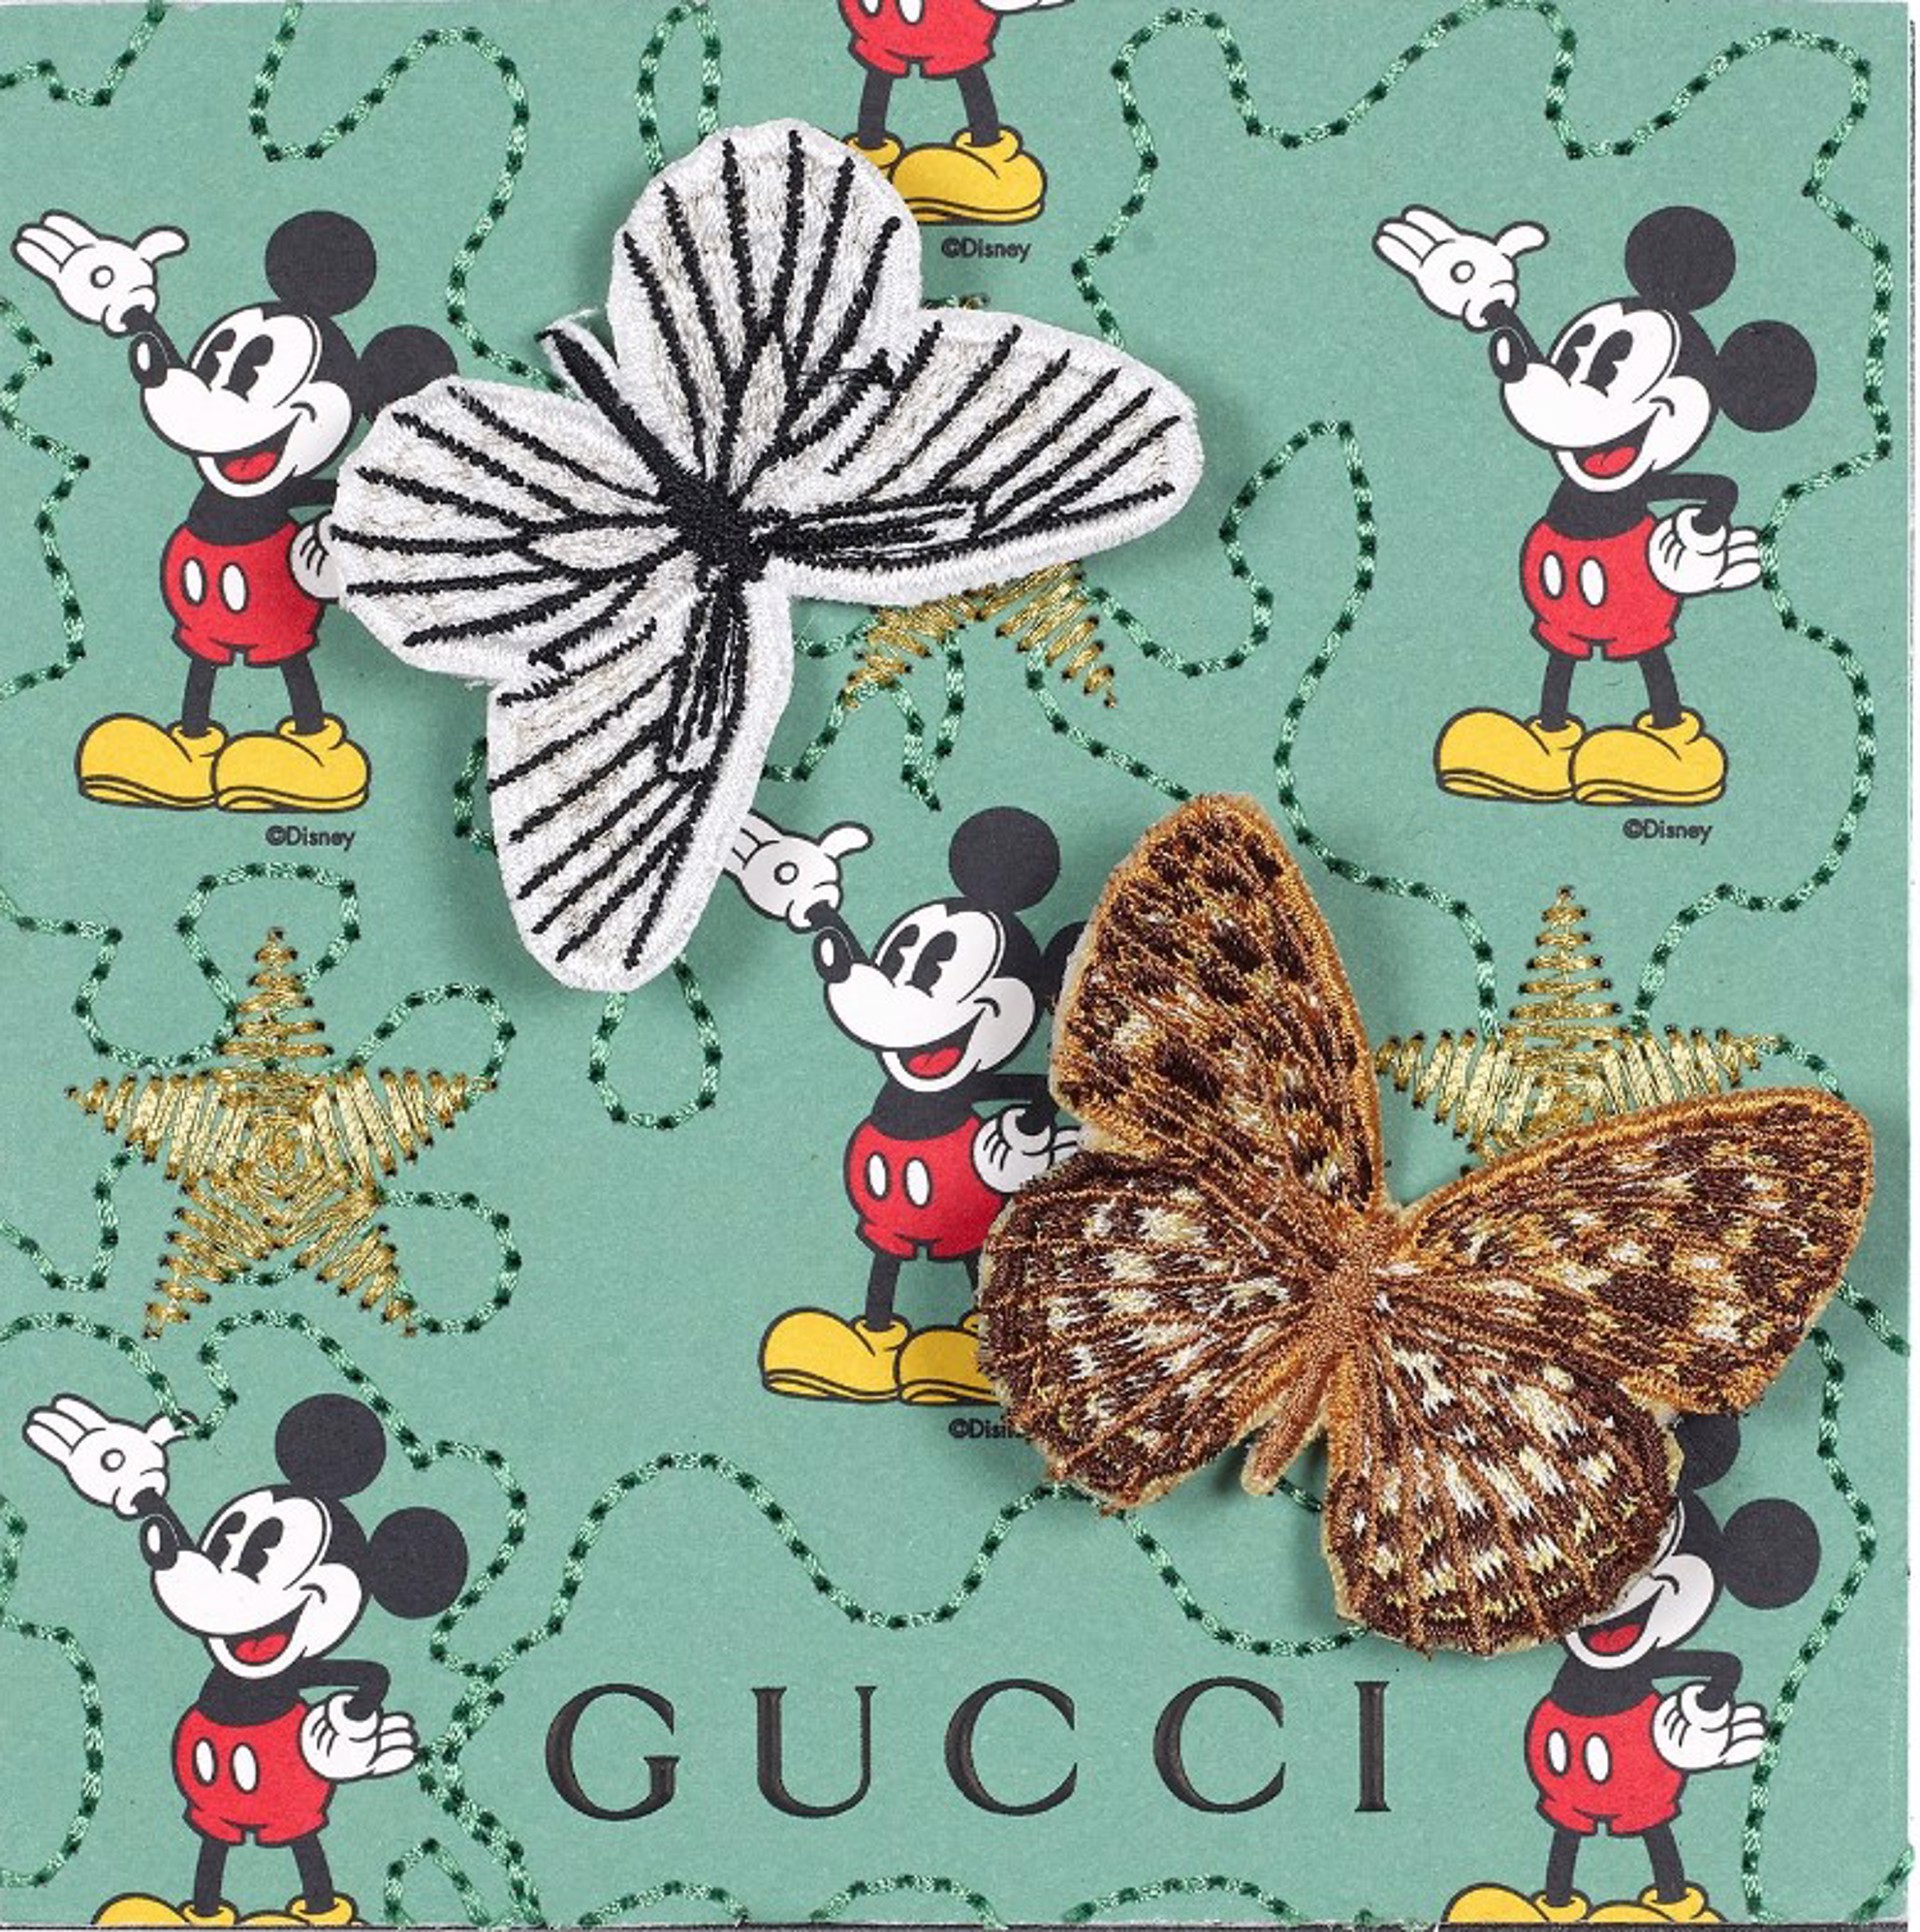 Gucci x Mickey Petite Butterfly Swarm by Stephen Wilson